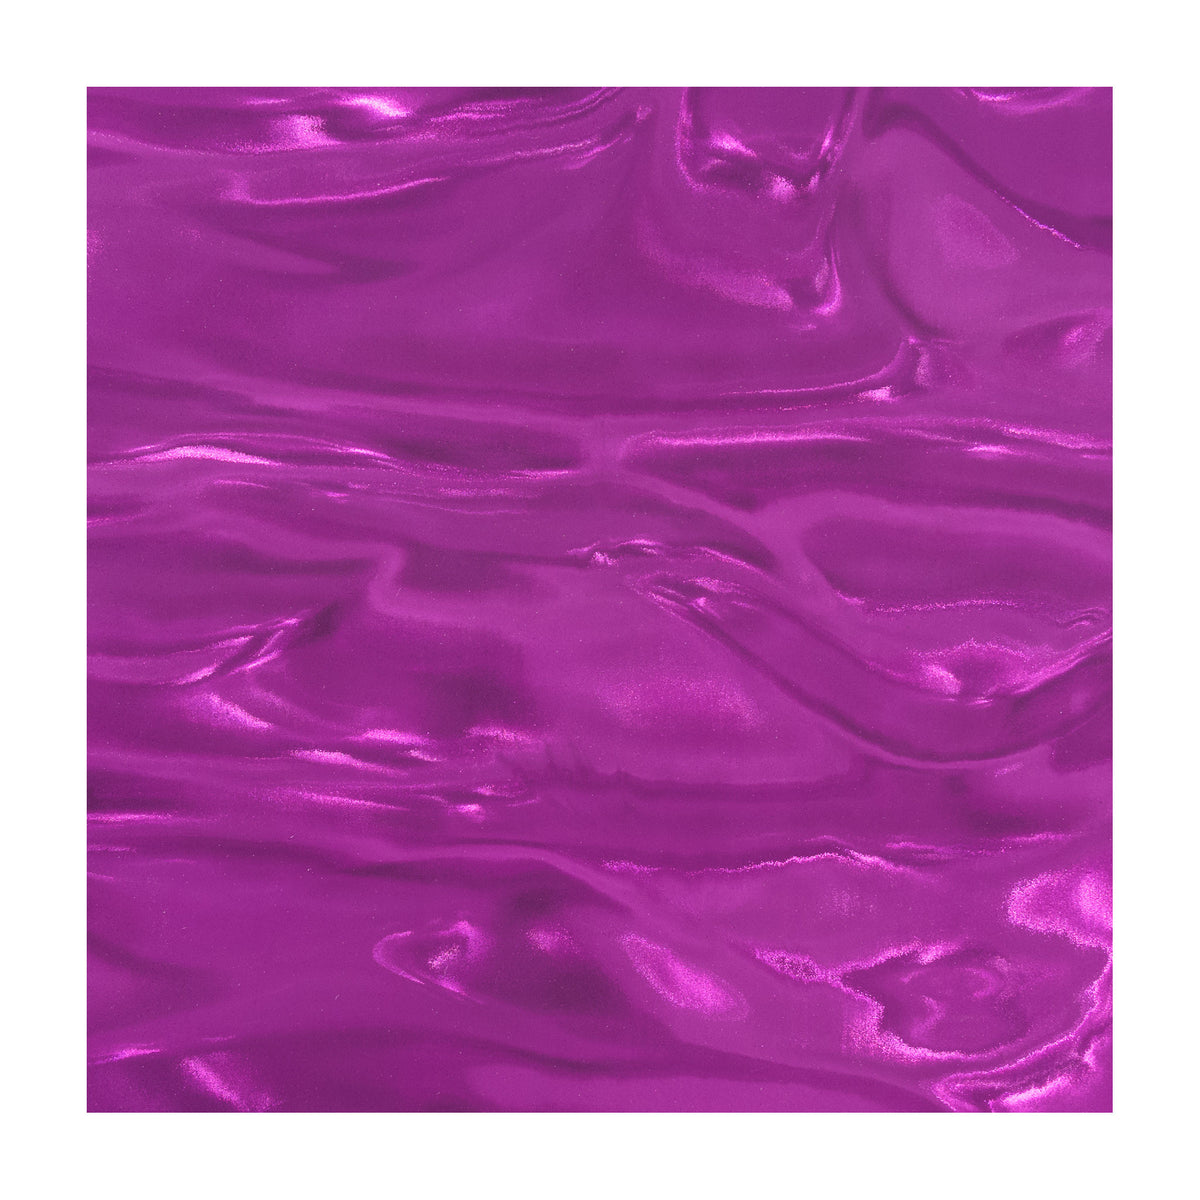 Rowlux Purple Moiré Illusion Film